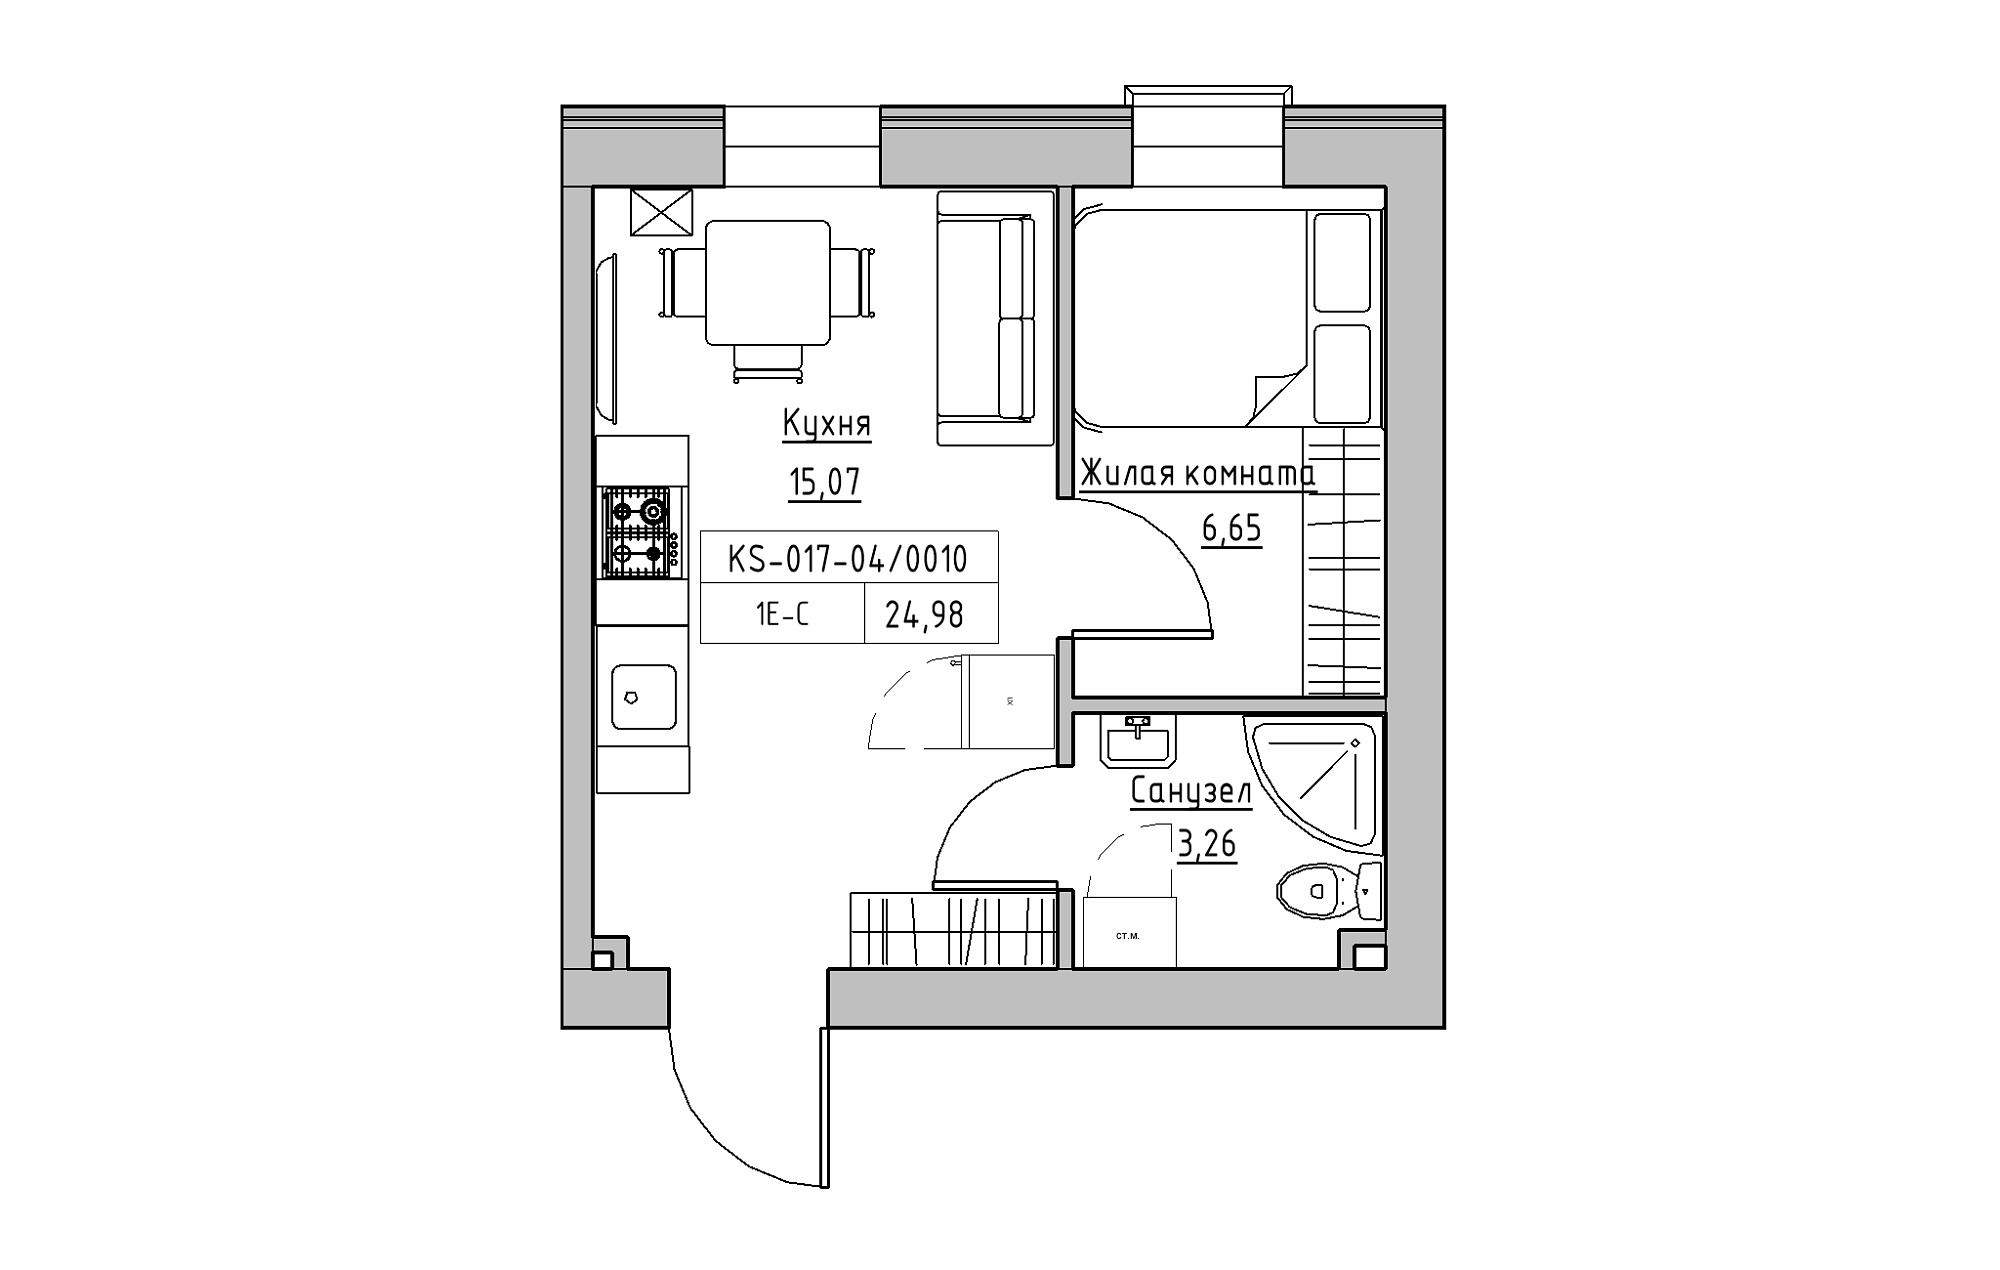 Planning 1-rm flats area 24.98m2, KS-017-04/0010.